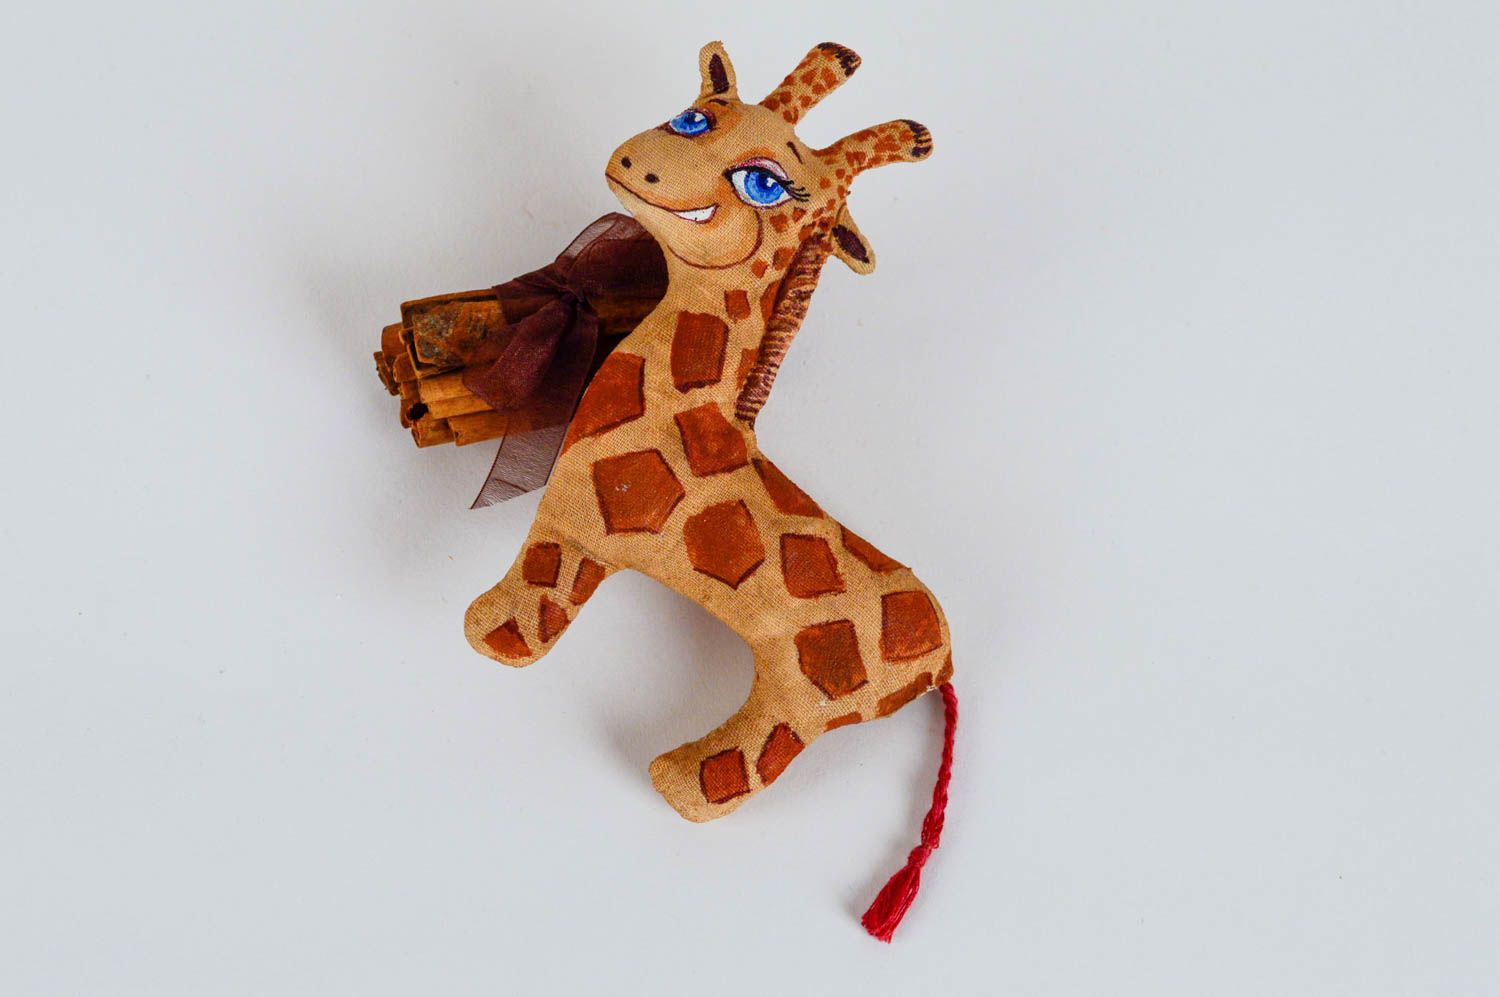 Childrens stuffed toy unusual handmade soft toy for kids interior design ideas photo 1